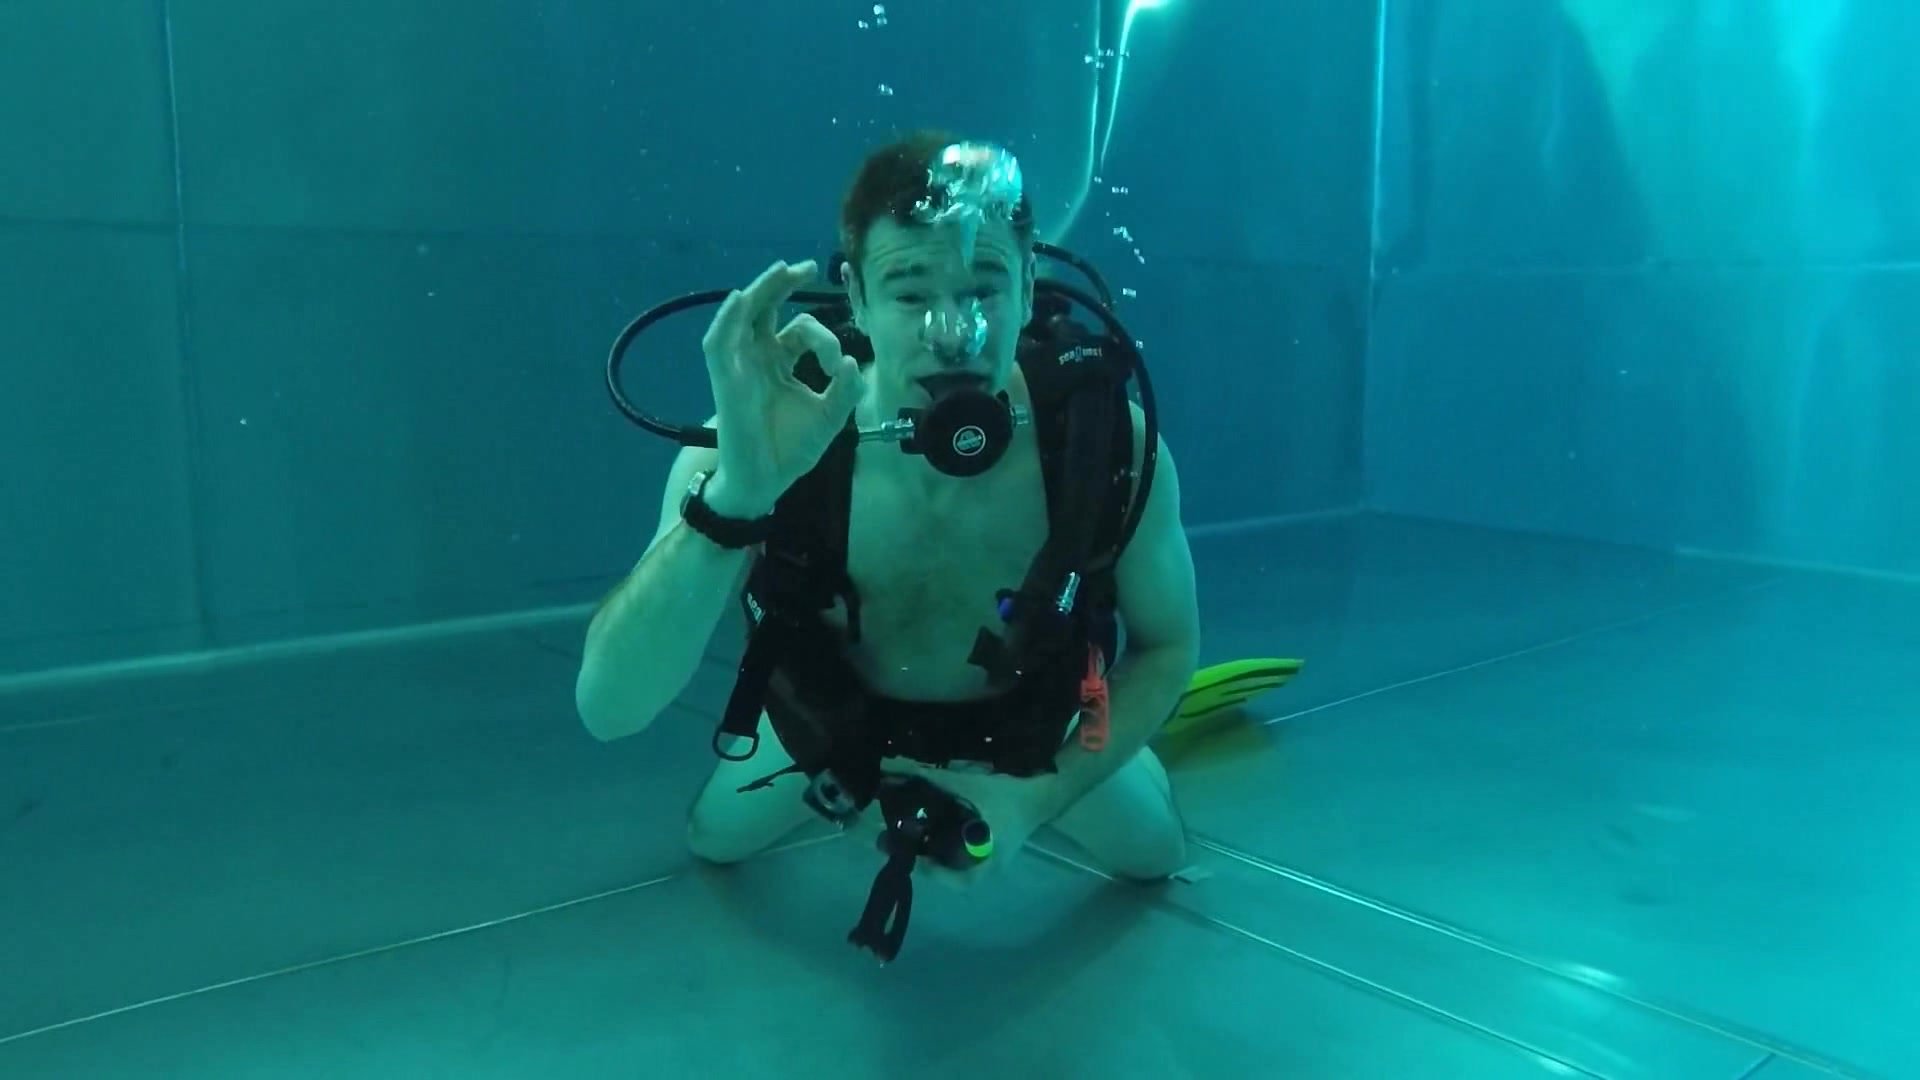 Speedo scubadiver removing mask underwater